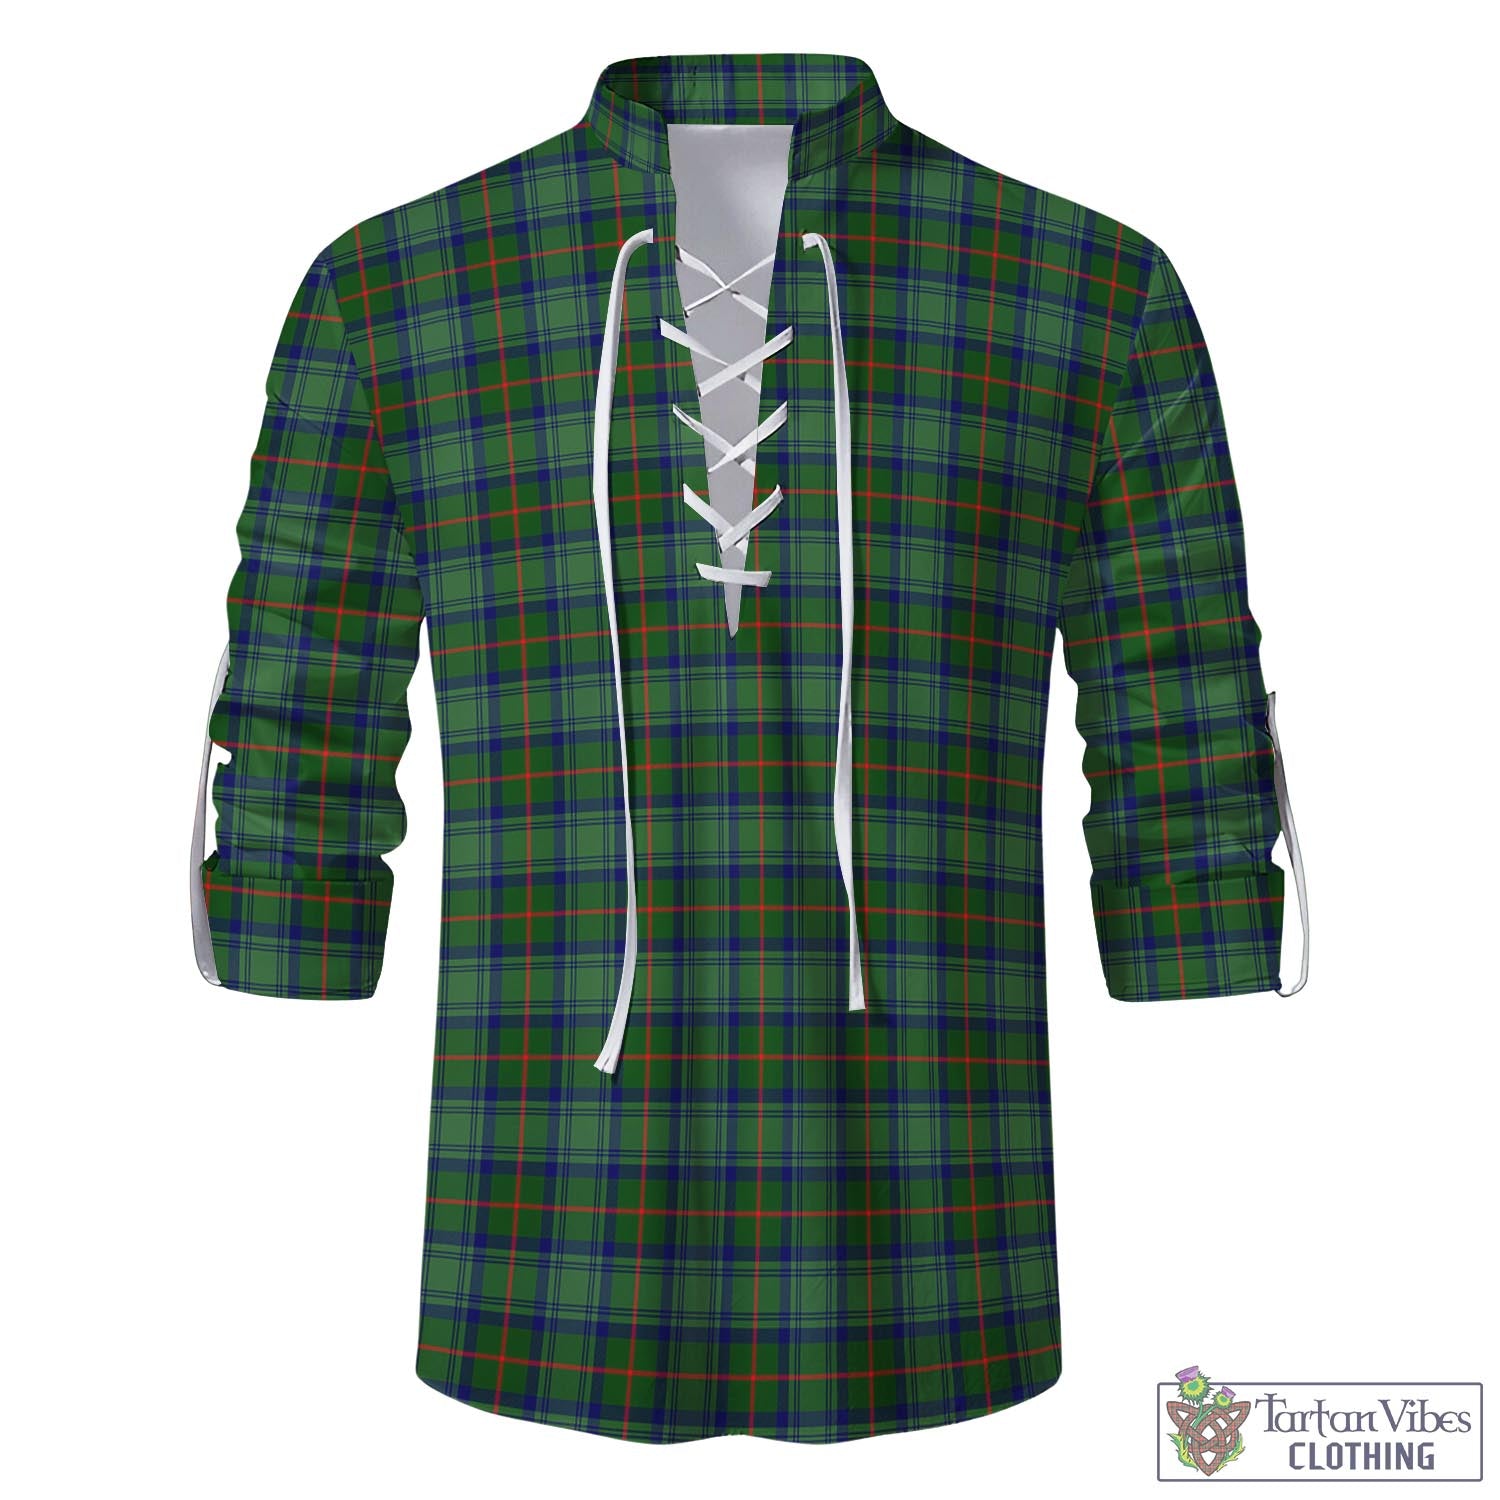 Tartan Vibes Clothing Cranstoun Tartan Men's Scottish Traditional Jacobite Ghillie Kilt Shirt